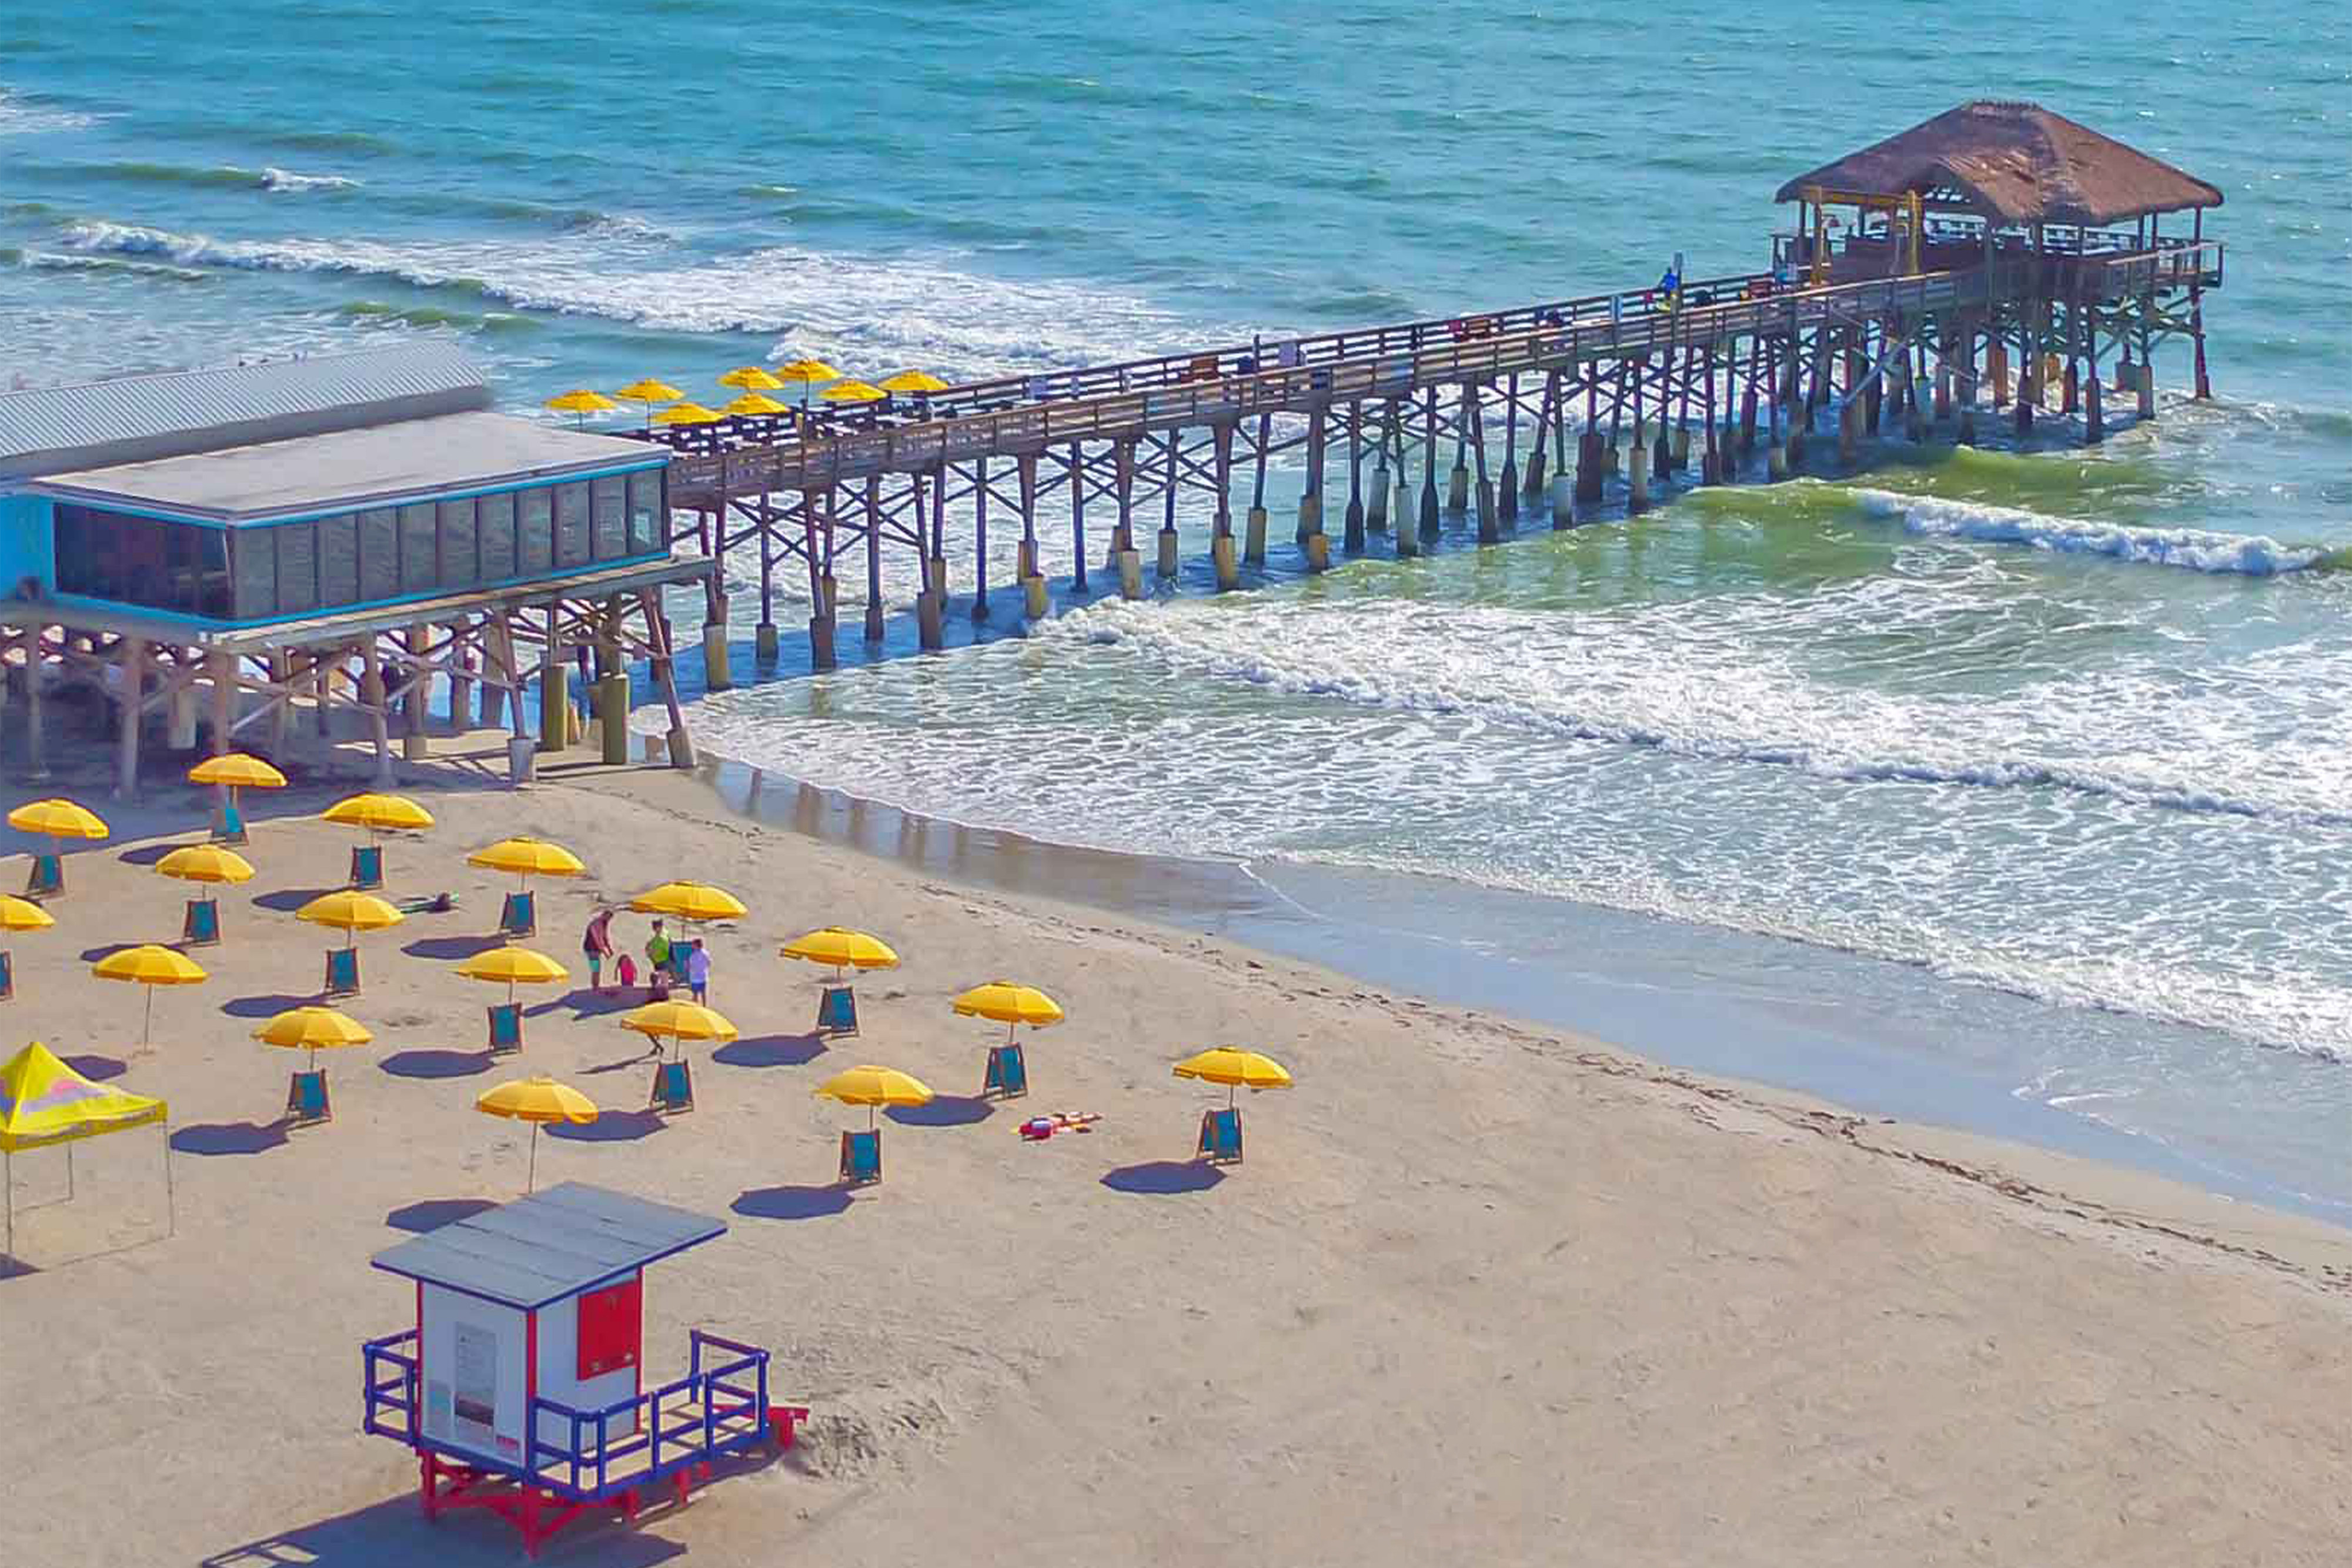 The Best Beach Retreat Venue In In Cocoa Beach Florida - pier